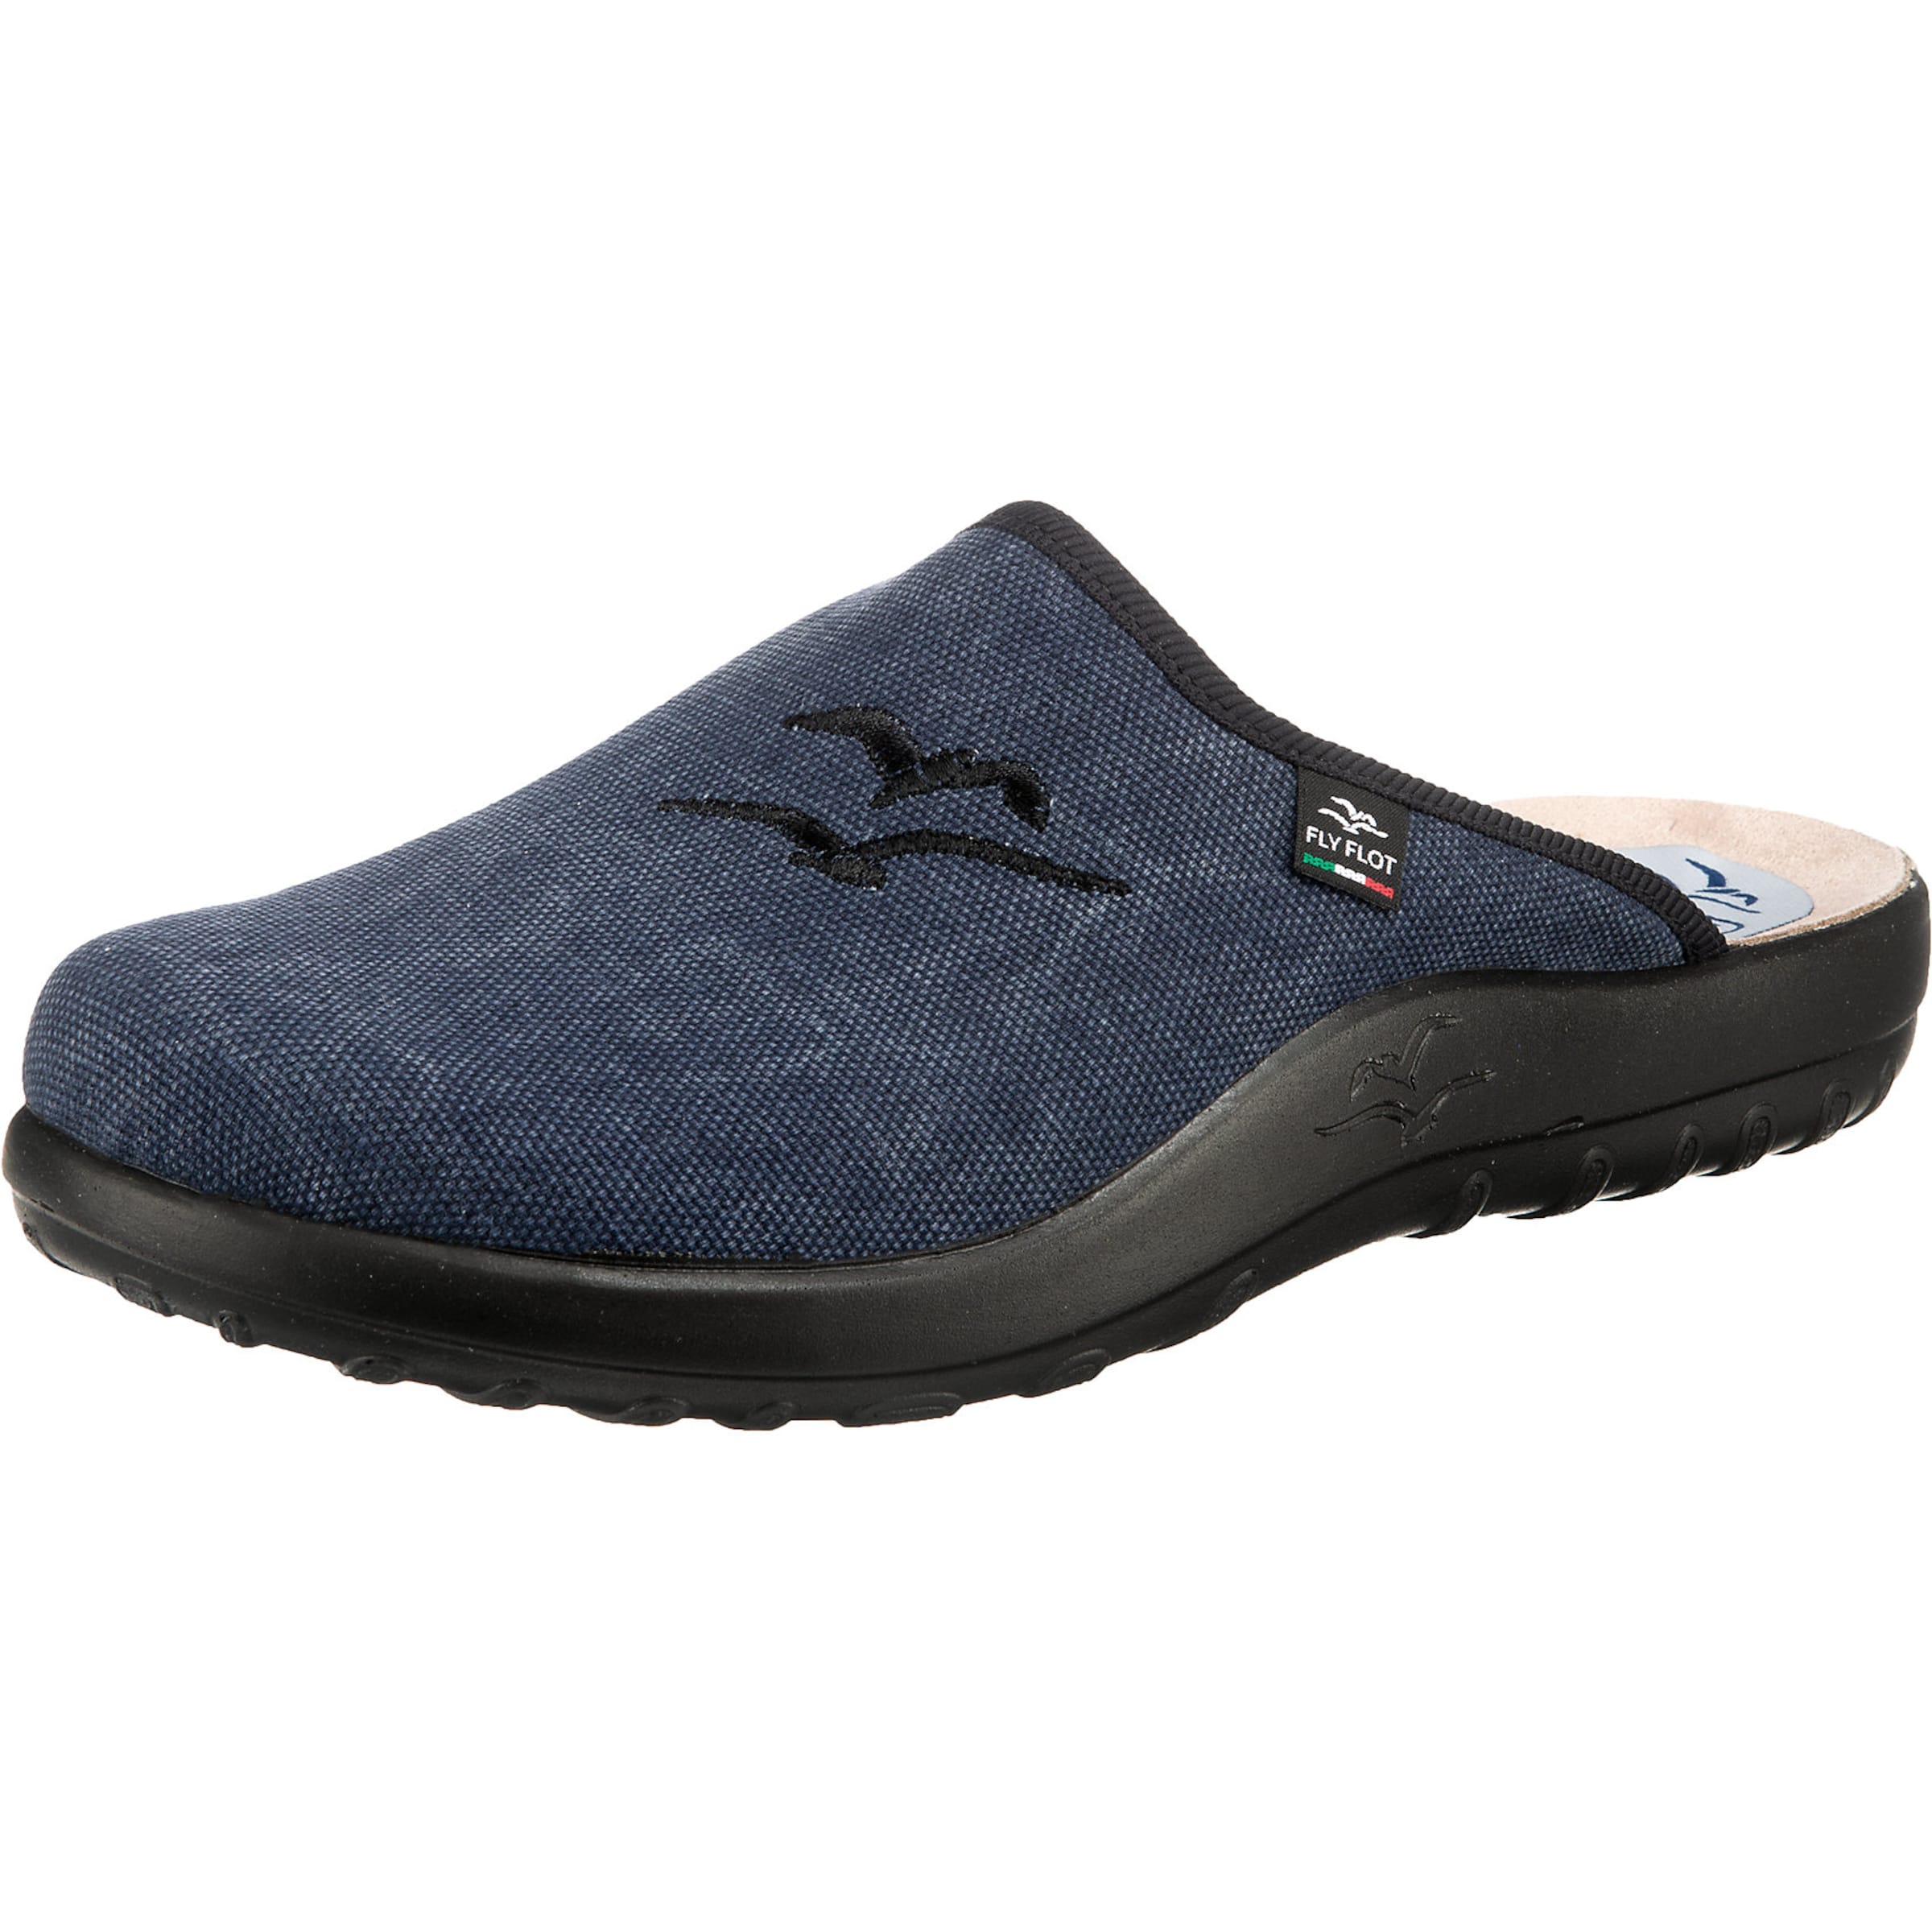 Männer Offene Schuhe FLY FLOT Pantoffeln in Blau - HK36489